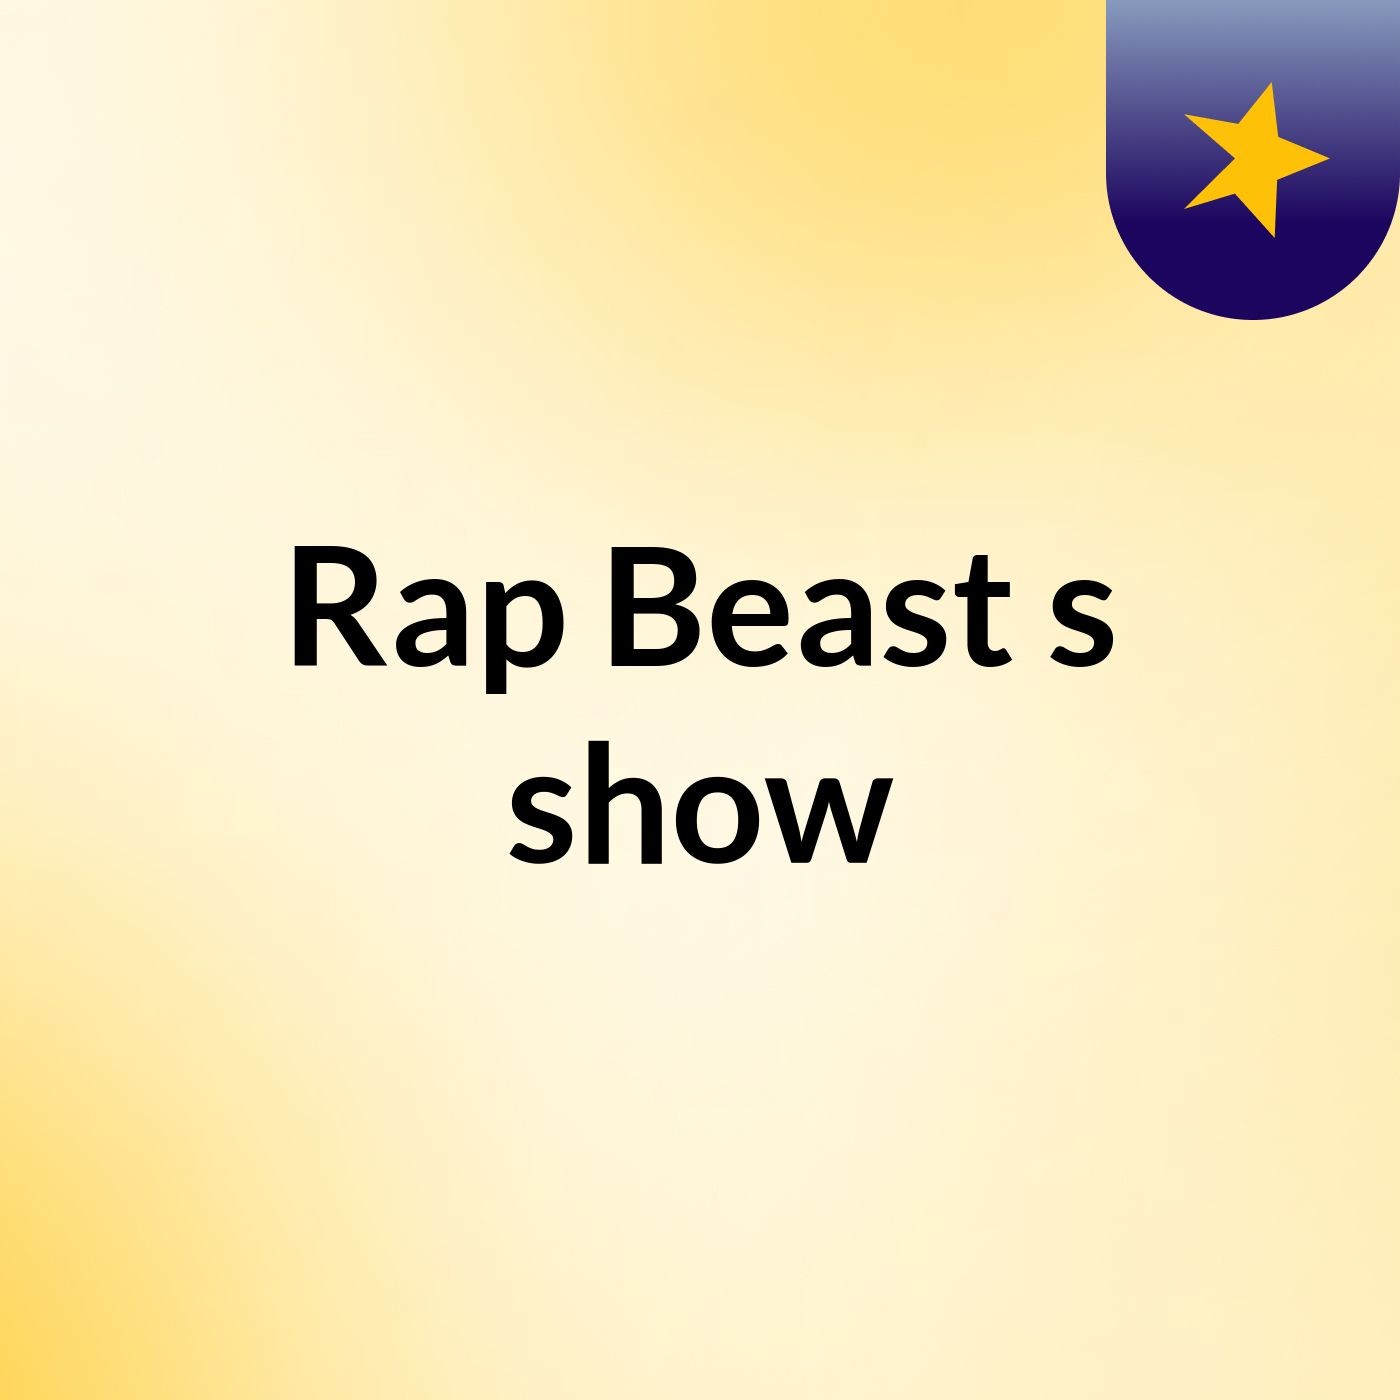 Rap Beast's show